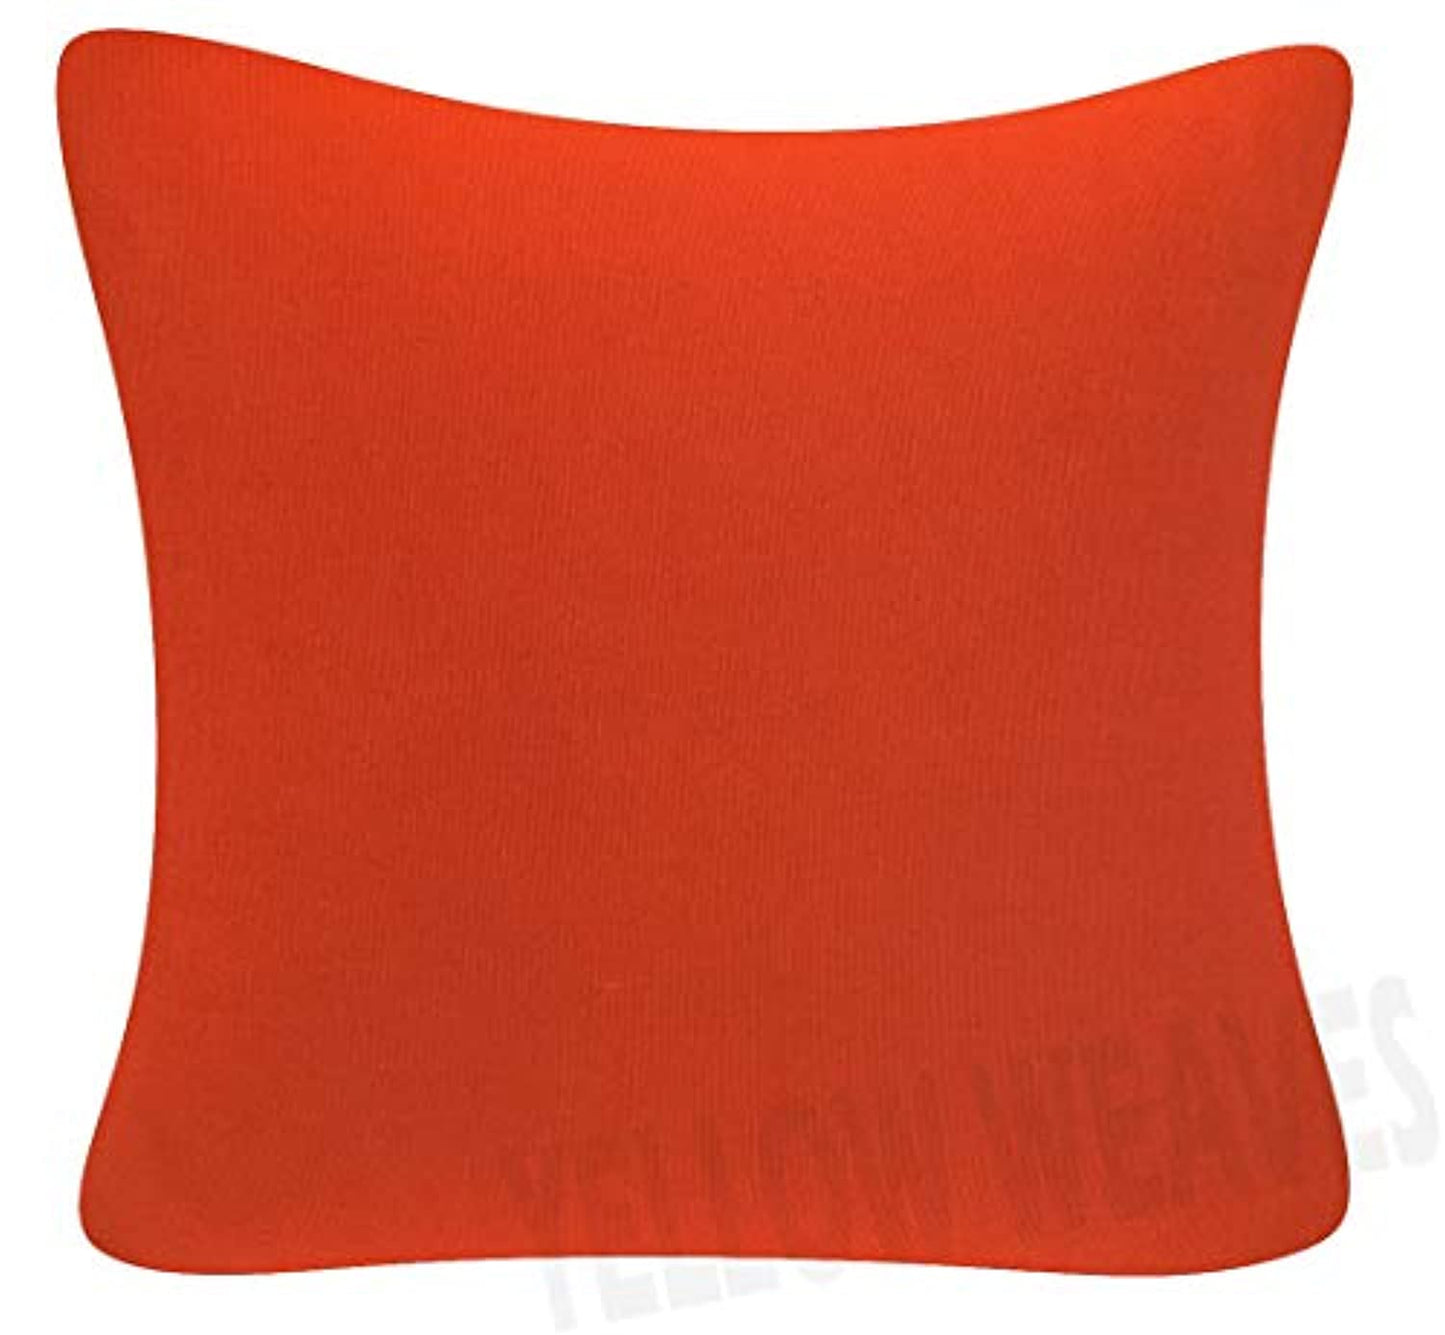 Cotton Canvas Decorative Cushion Covers 16 X 16 Inches Set of 5 & 3, Multi Colour